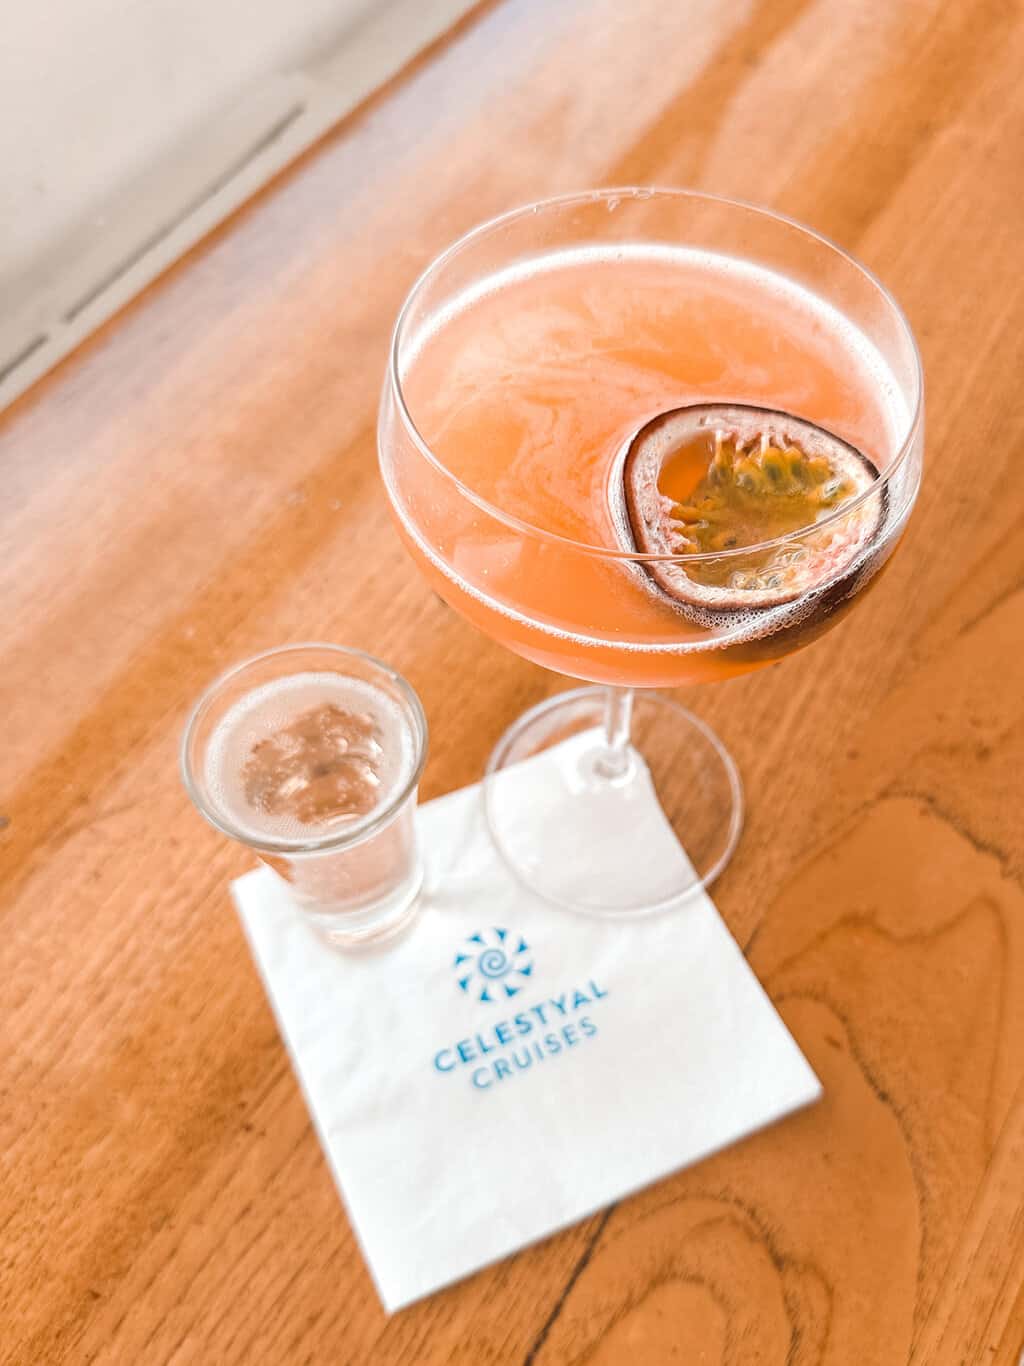 Celestyal Cruises cocktail menu